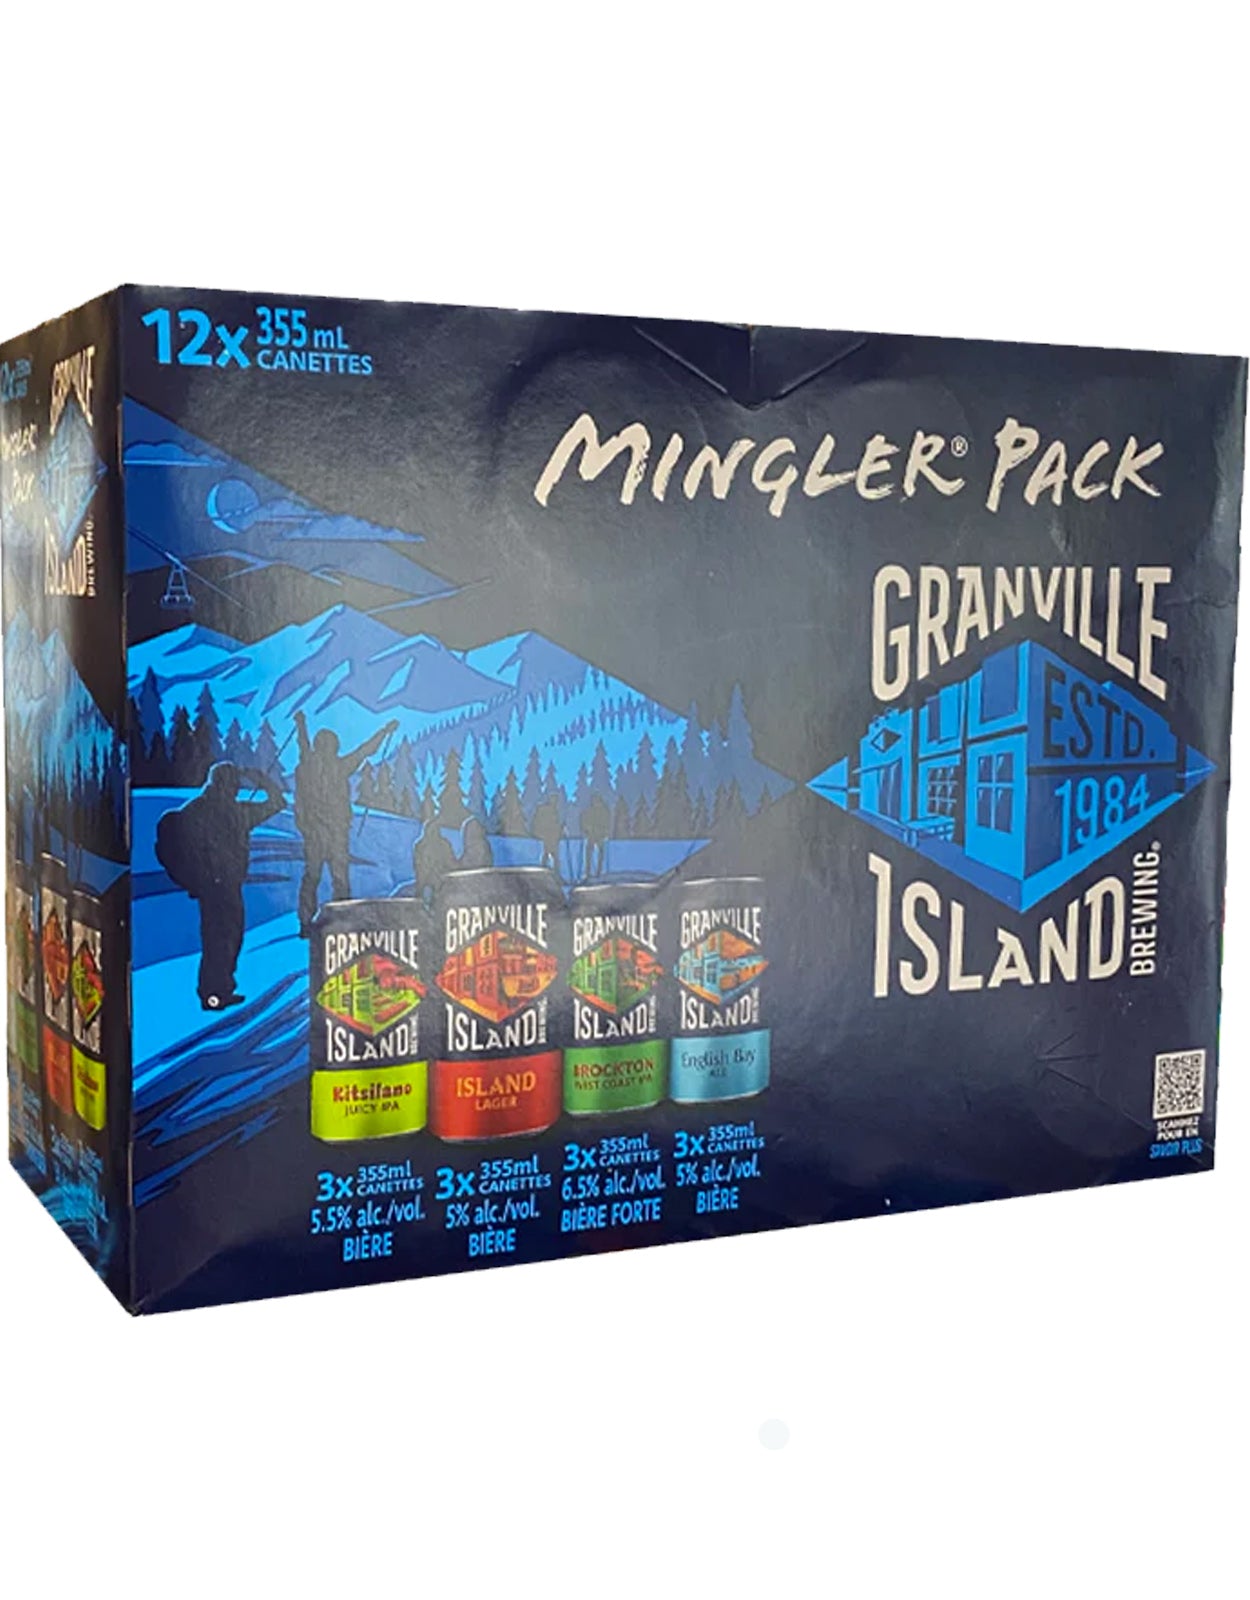 Granville Island Mingler Pack 355 ml - 12 Cans